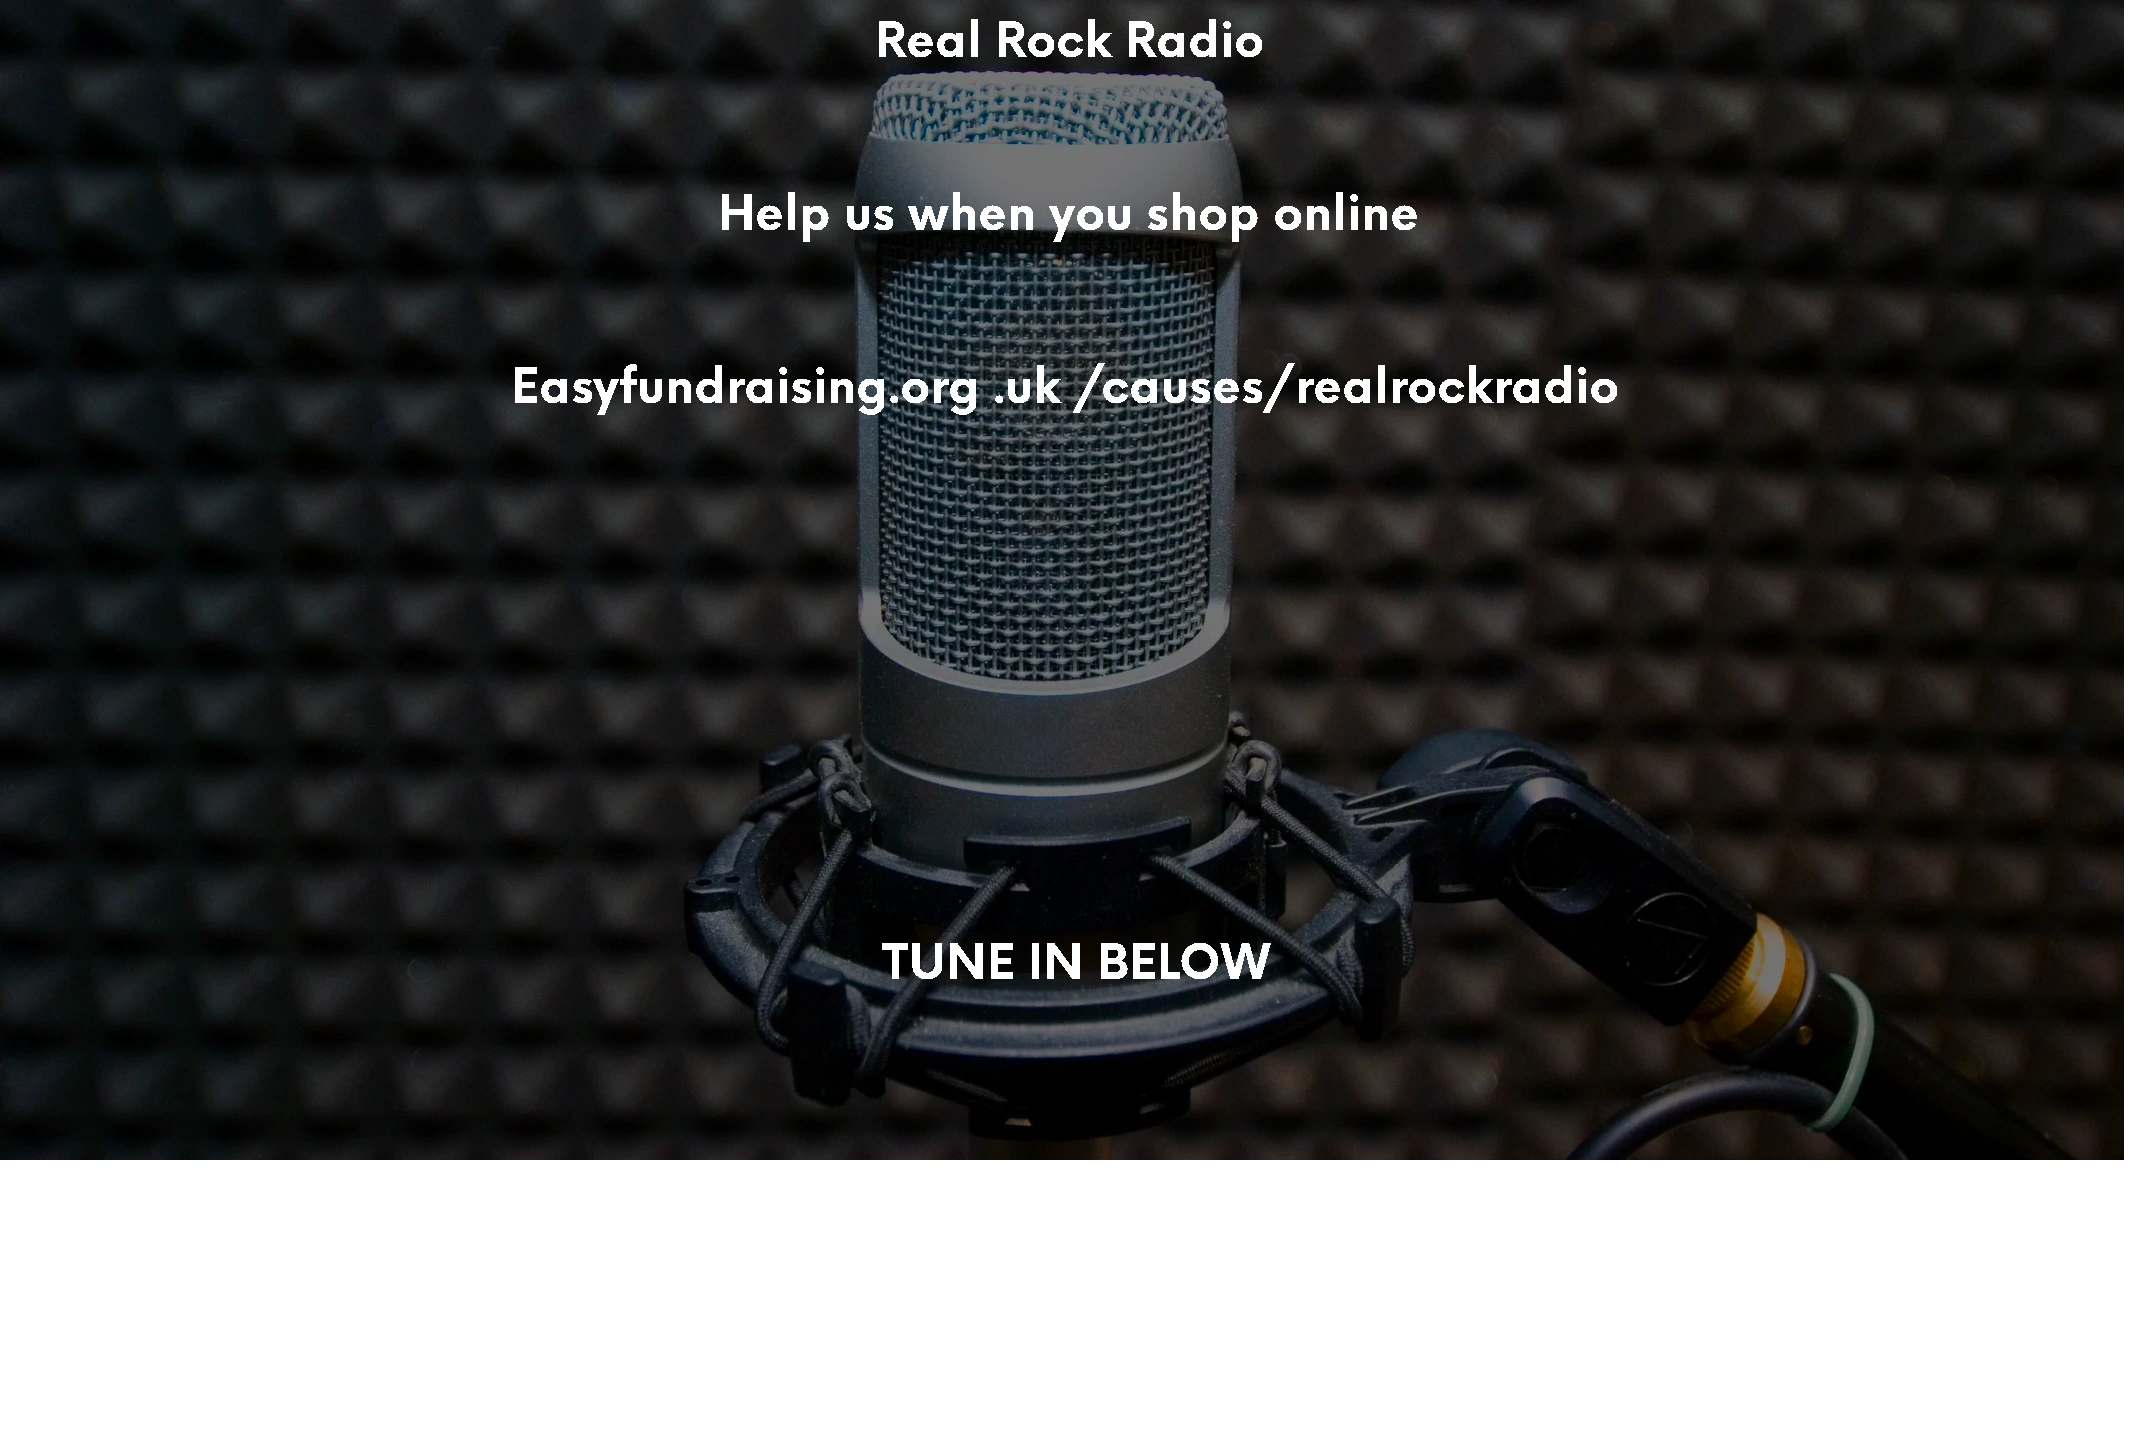 Real Rock Radio - Real Rock Radio